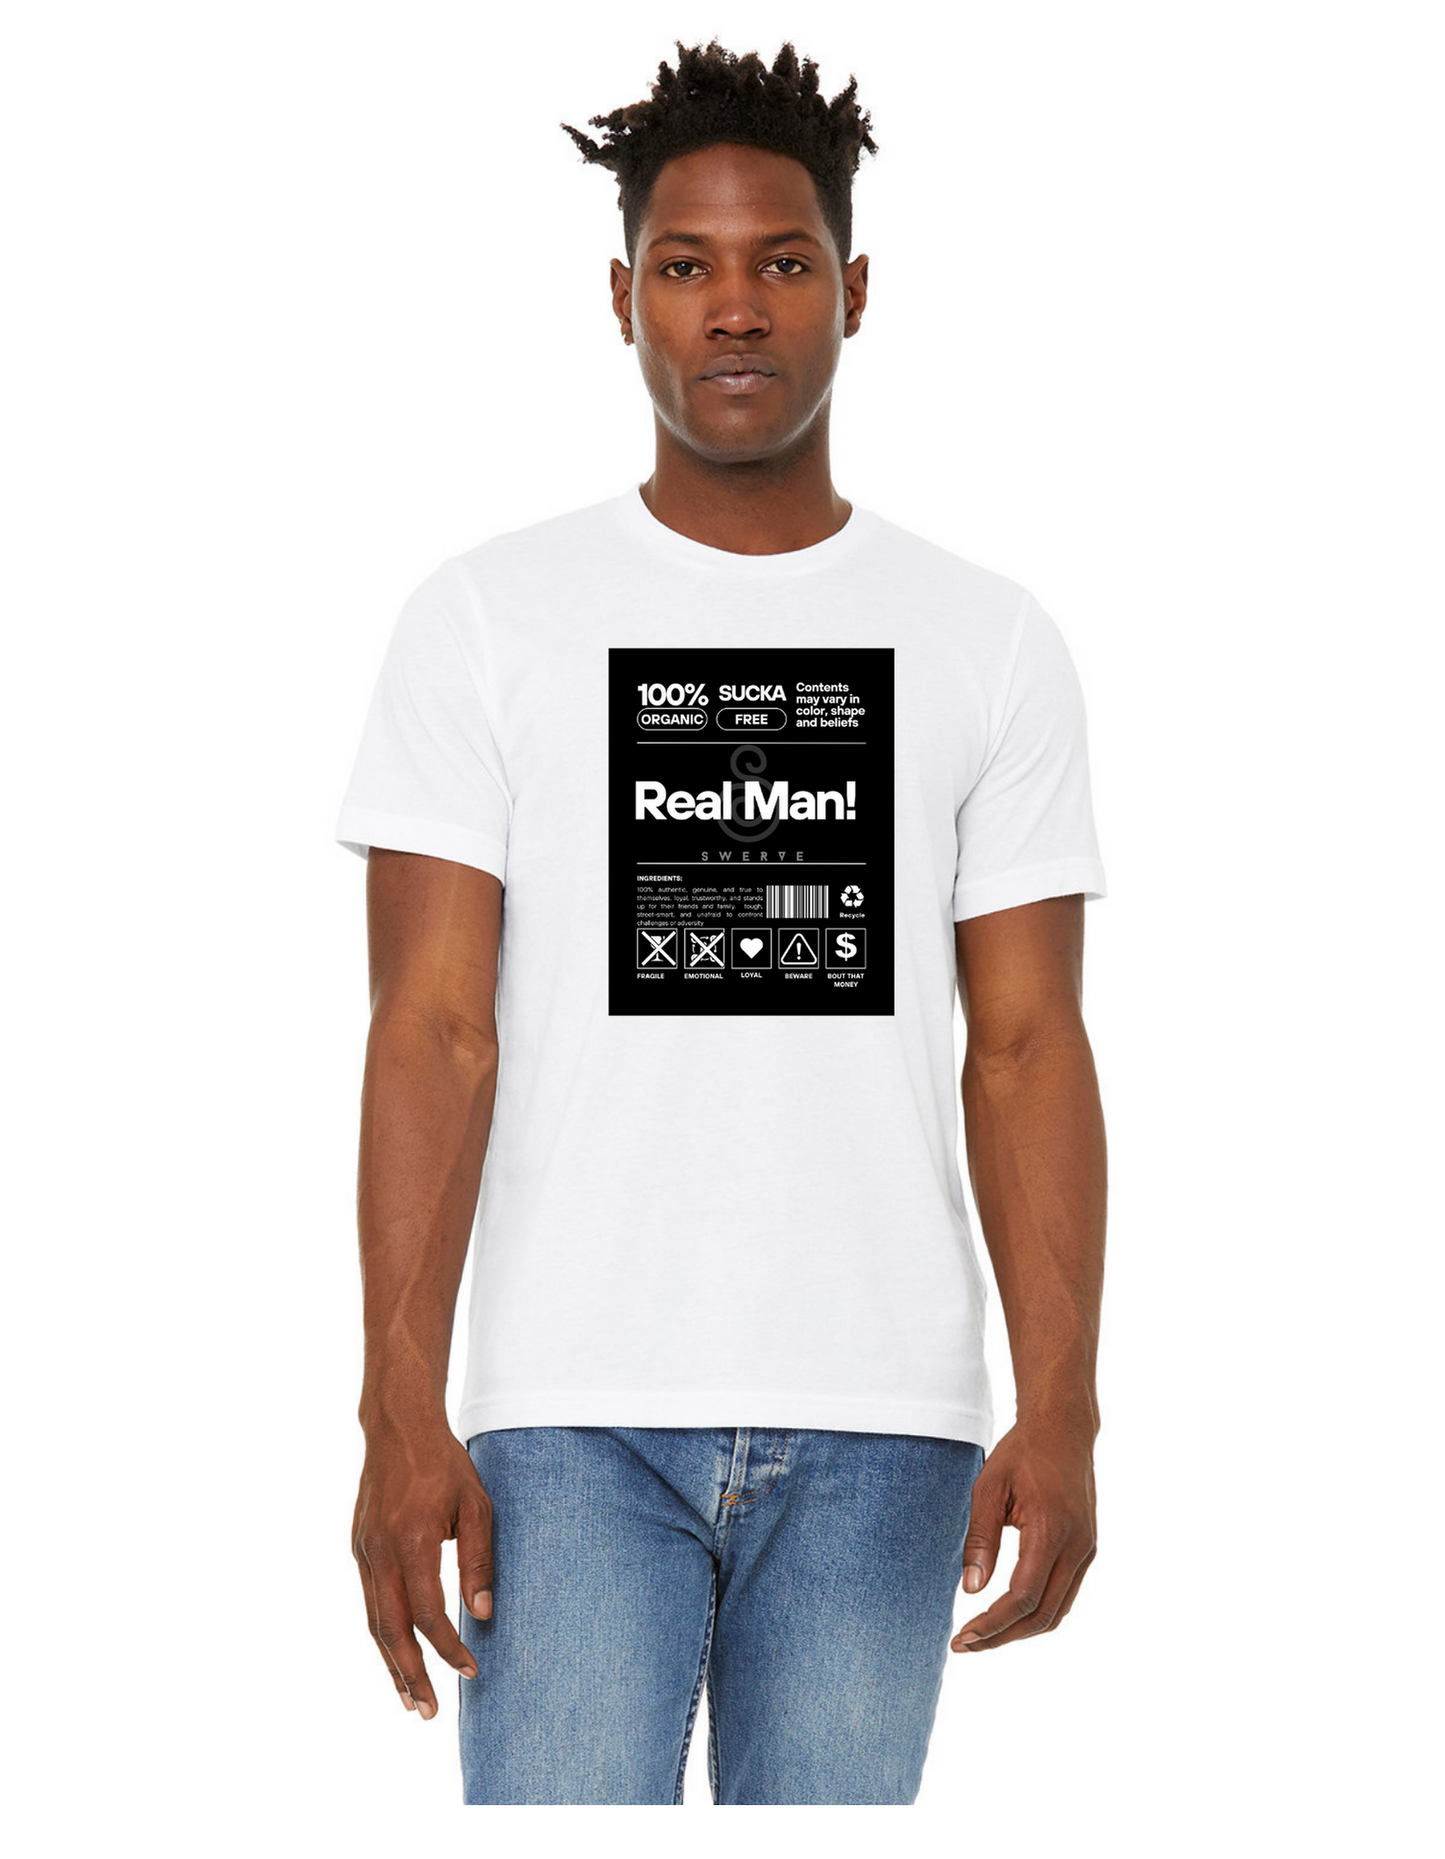 Authentic Gentlemen: The 100% Real Man T-Shirt